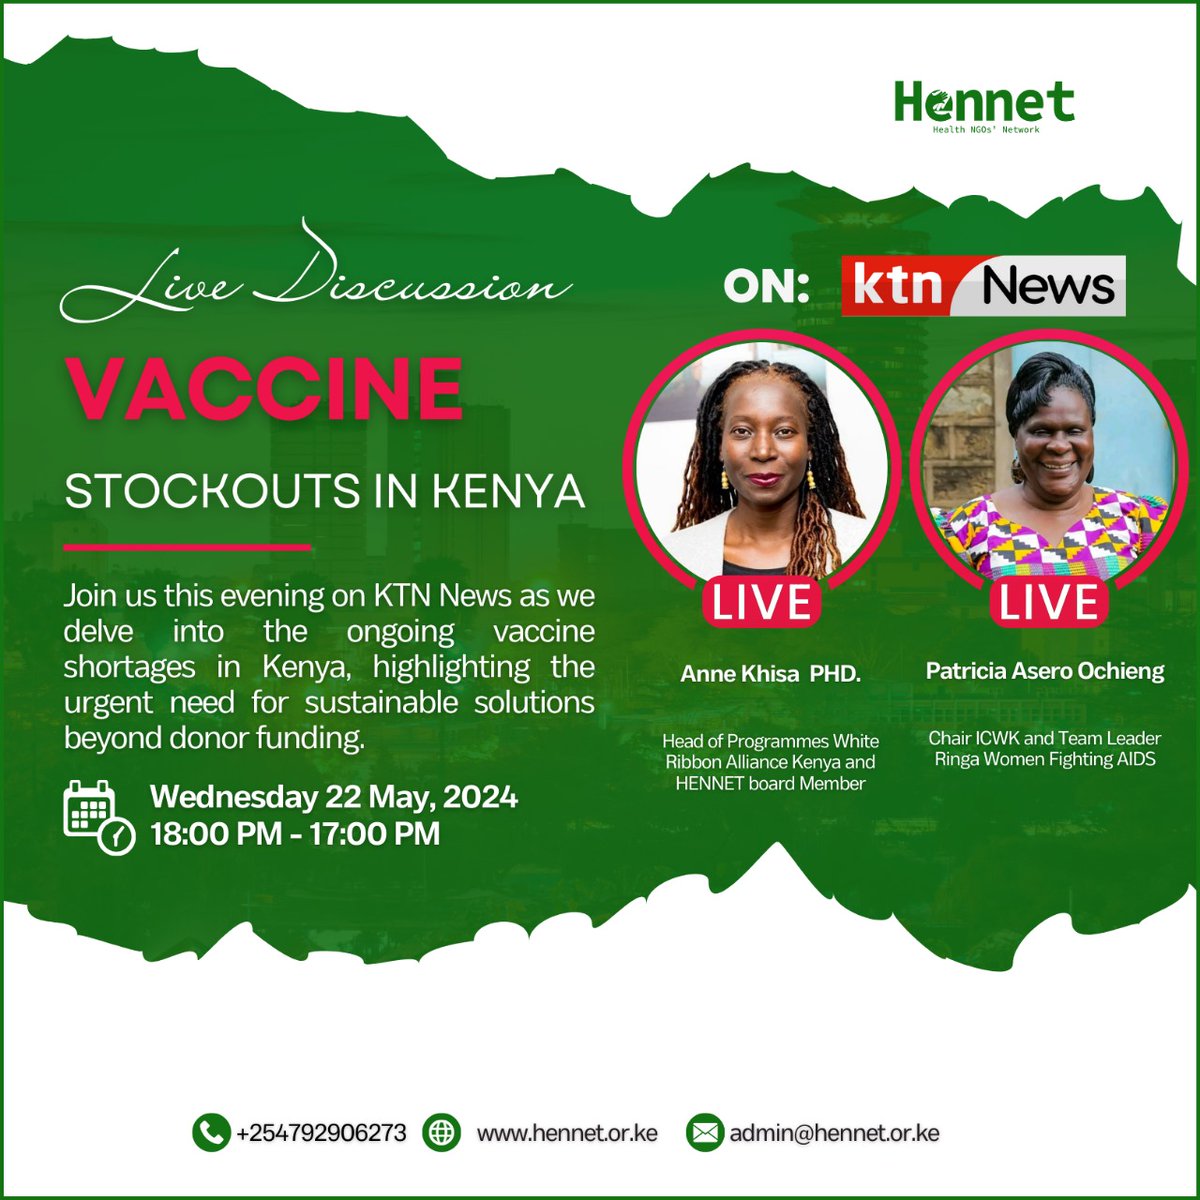 Collaborate with government agencies and healthcare providers to mobilize resources against measles. #VaccineStockOutsKE @IncubatorGHAI @kenyagovernors @MOH_Kenya @AYARHEP_KENYA @gatesfoundation @NAssemblyKE @theGFF @HennetKenya